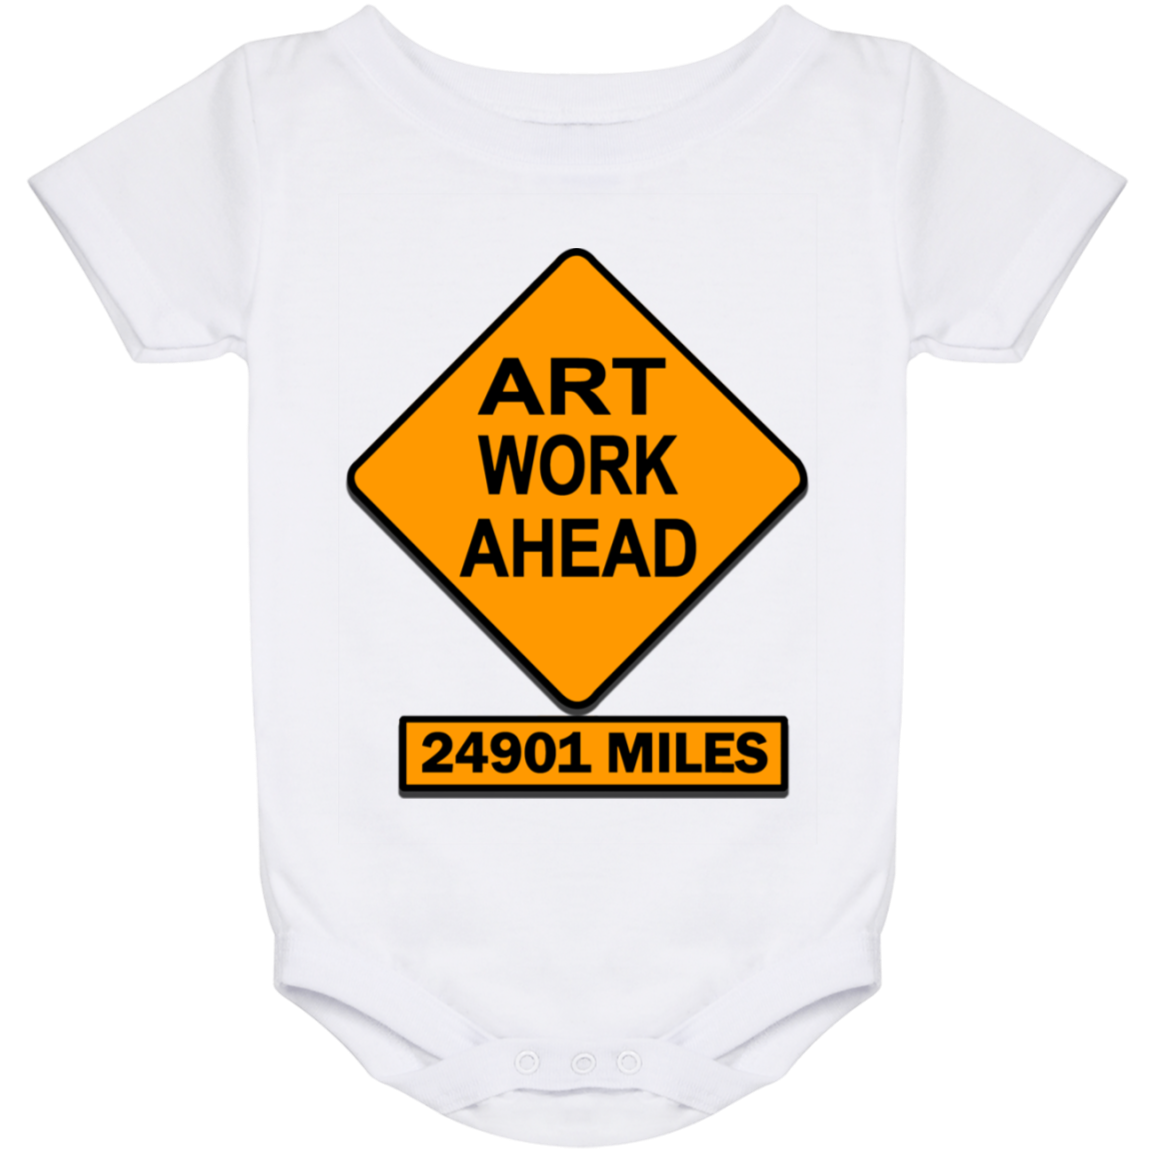 ArtichokeUSA Custom Design. Art Work Ahead. 24,901 Miles (Miles Around the Earth). Baby Onesie 24 Month